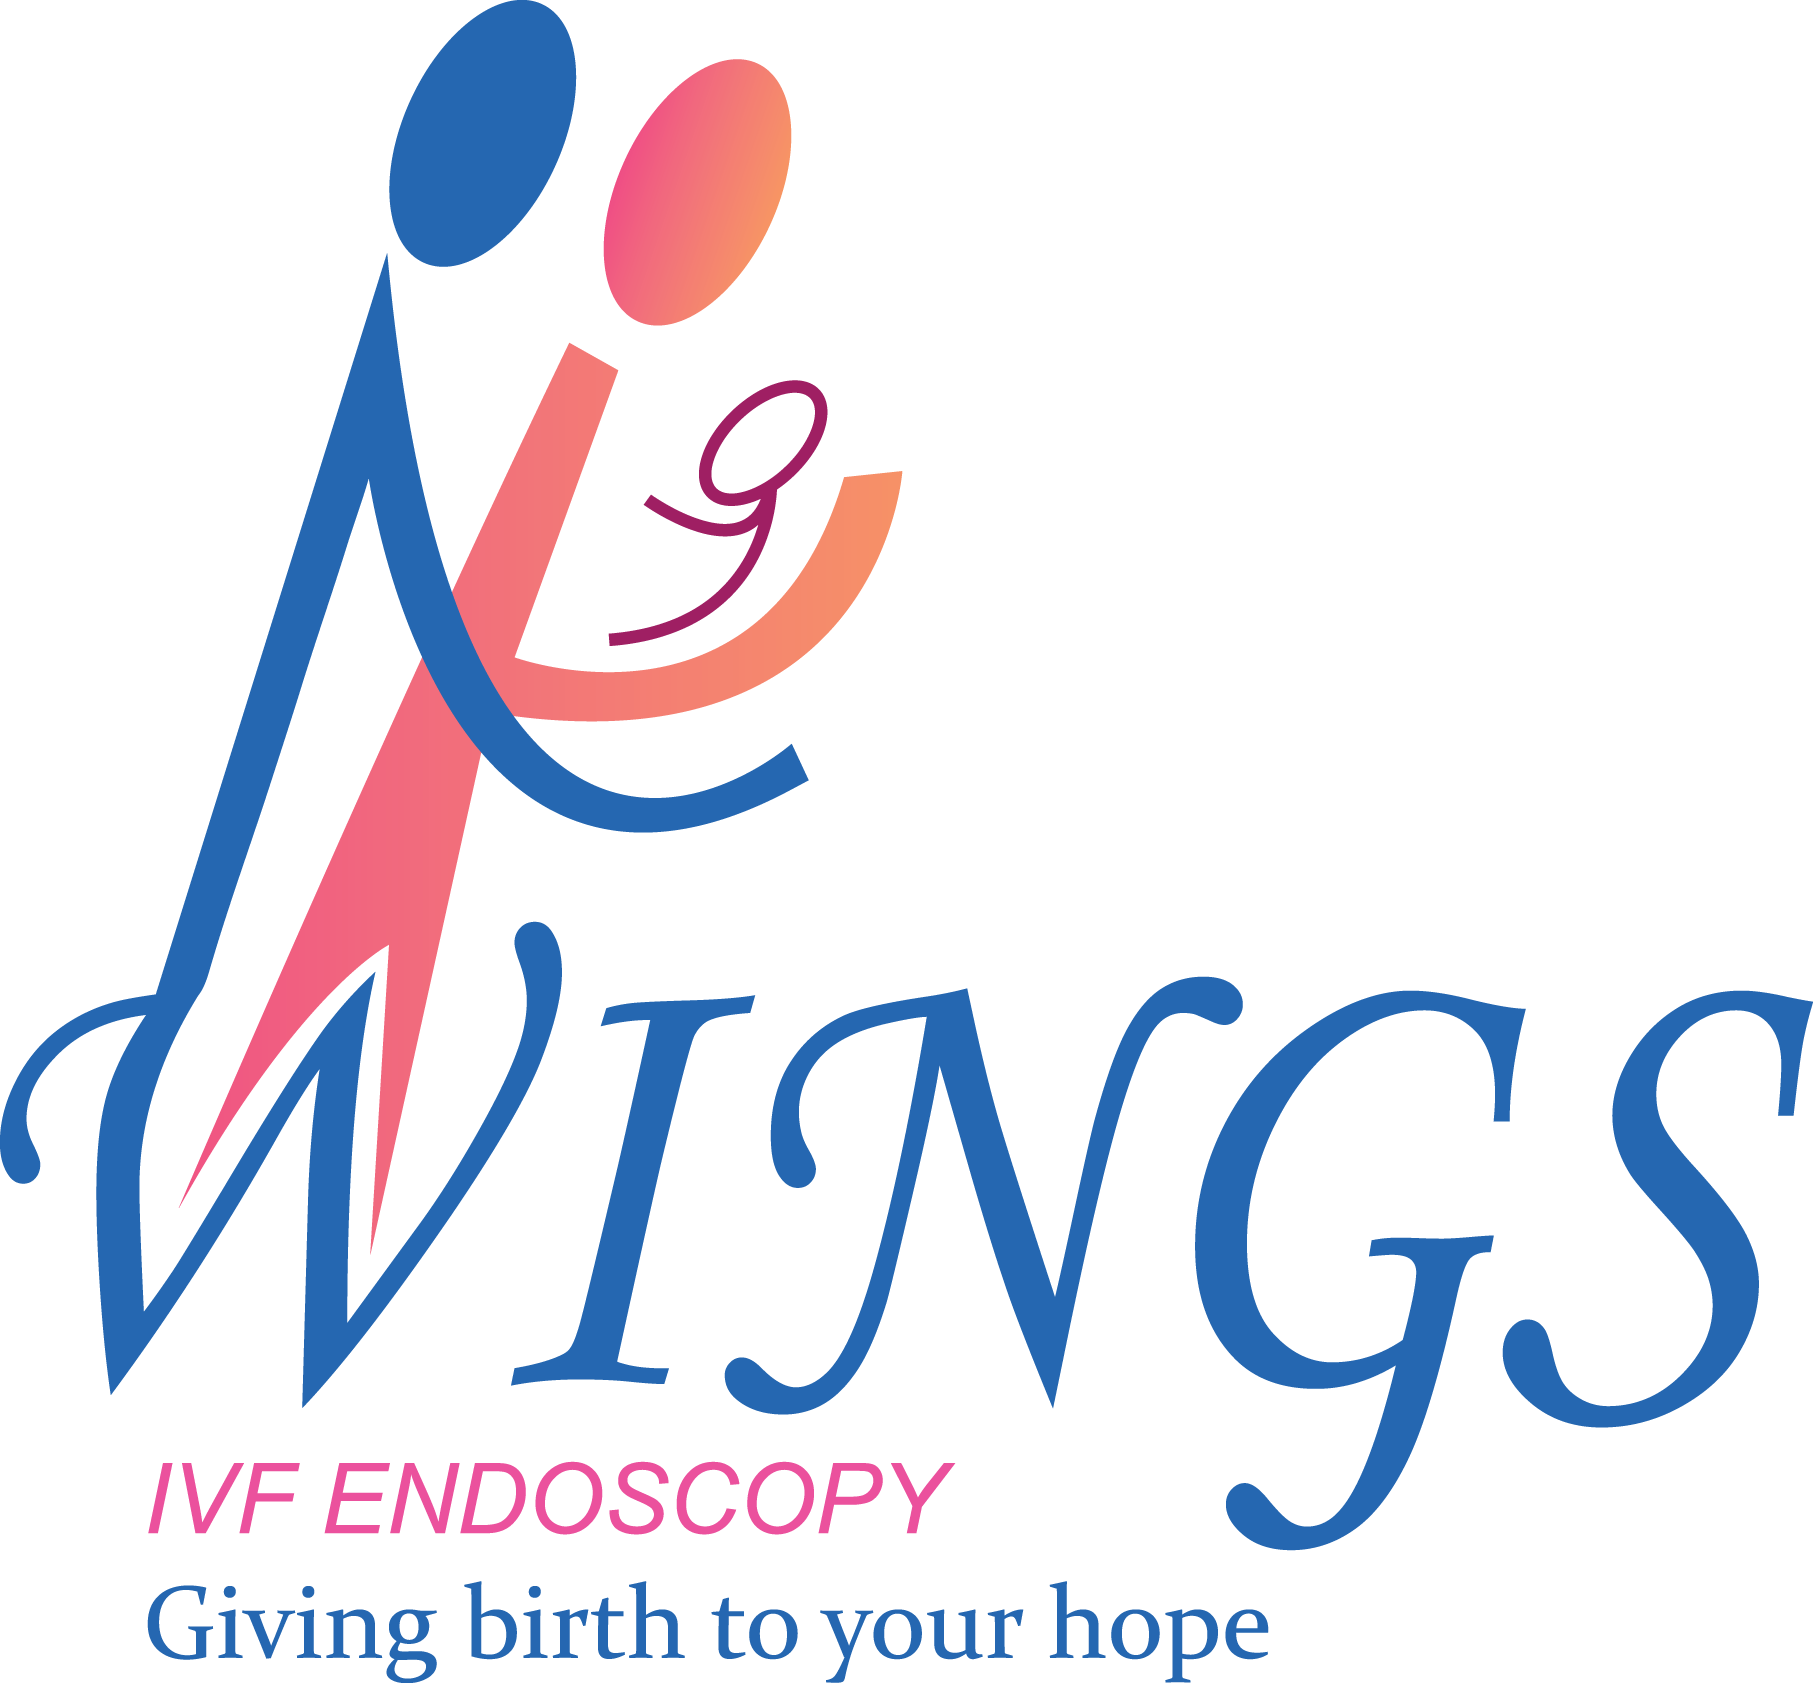 Wings Hospitals|Hospitals|Medical Services